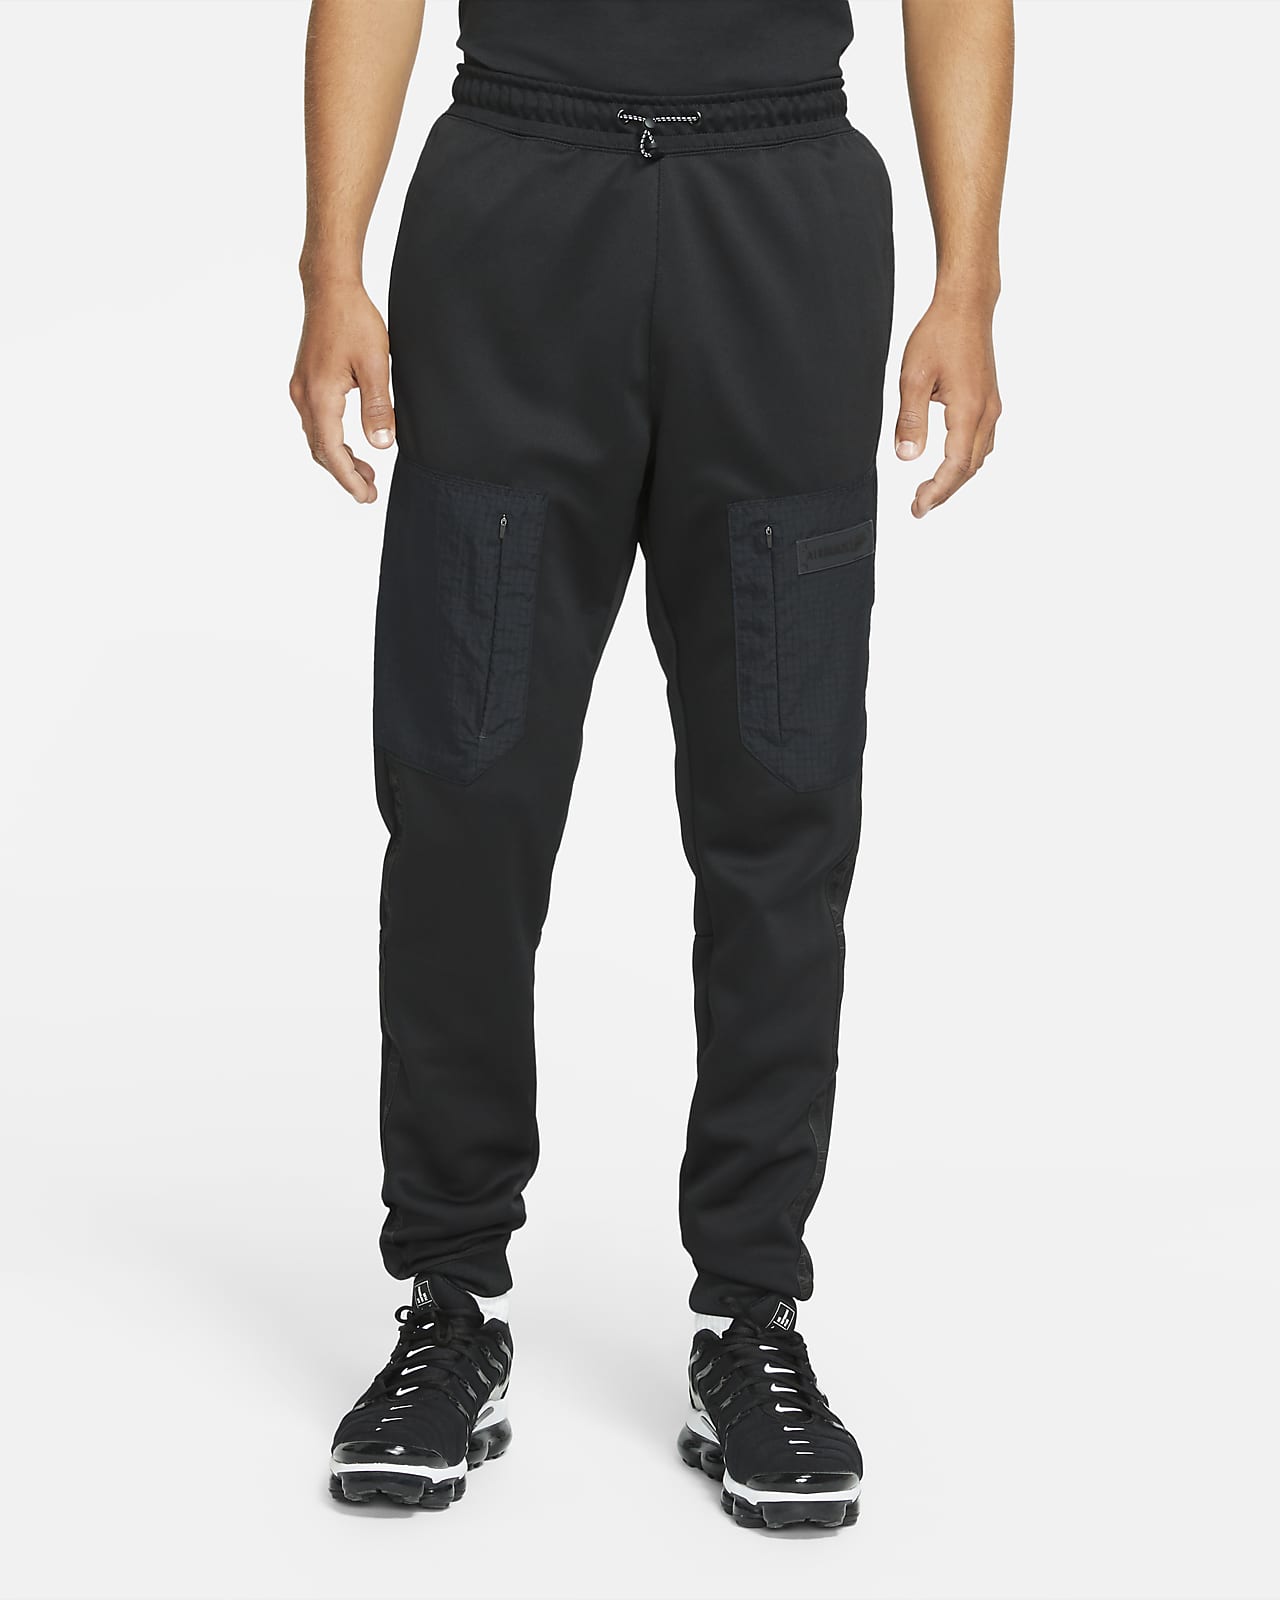 Nike Sportswear Air Max Men's Trousers 